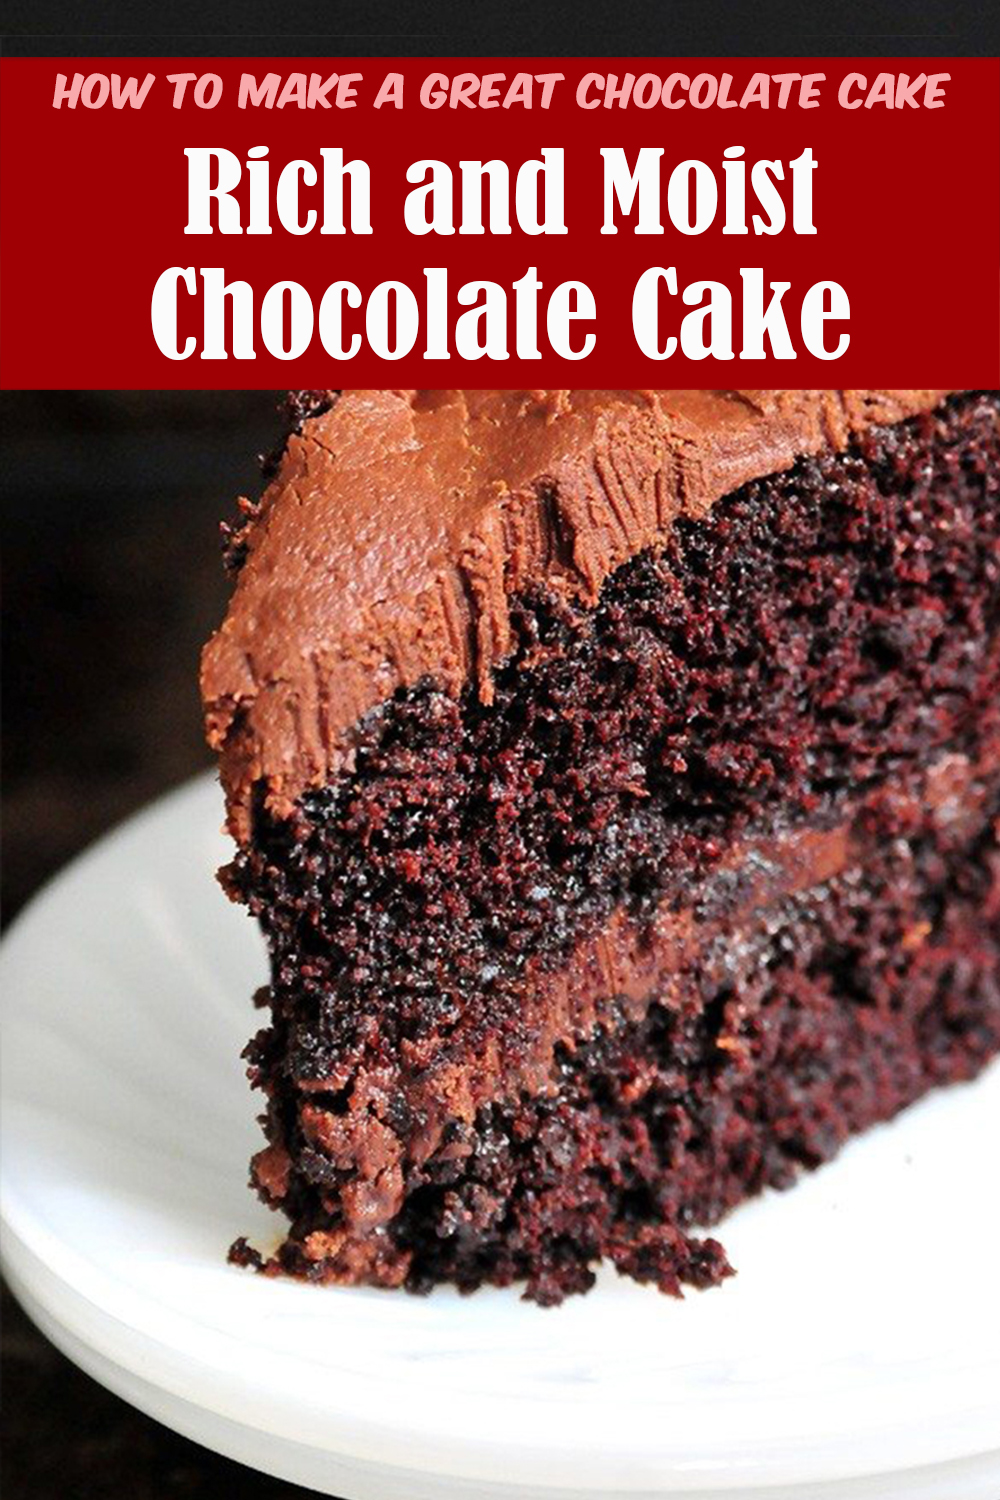 Rich and Moist Chocolate Cake Recipe